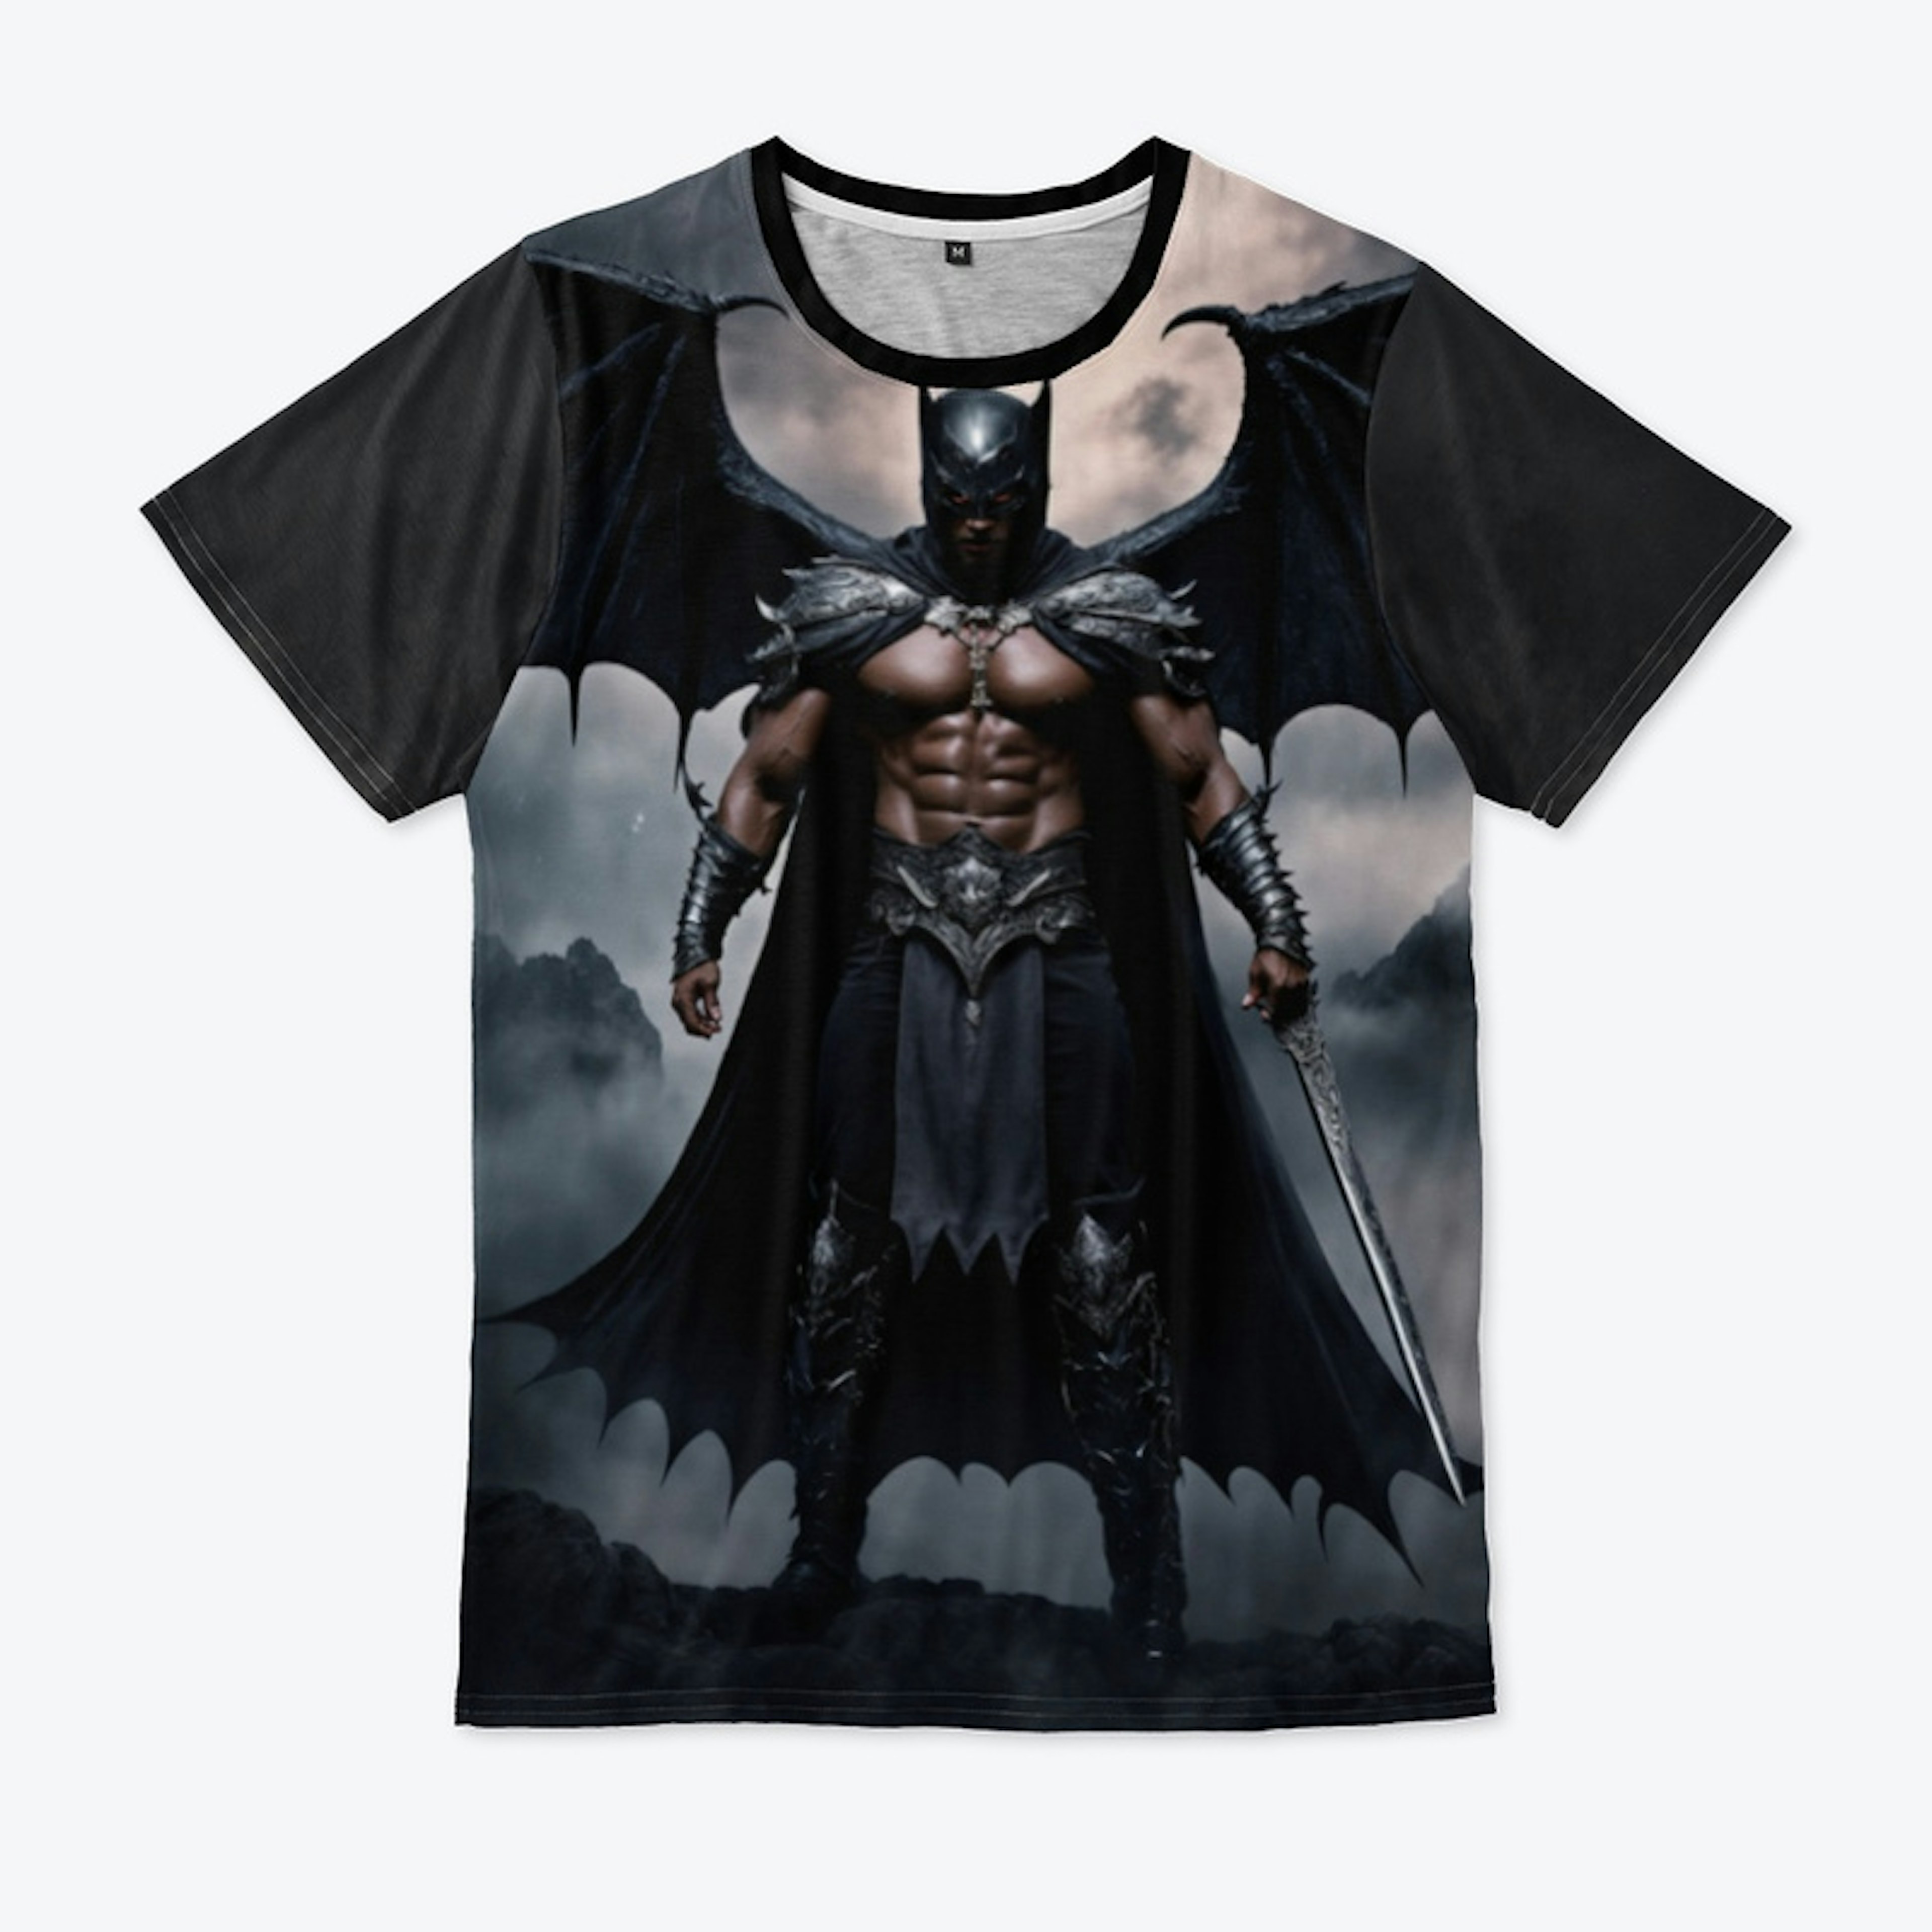 Strong Muscular Evil Black Vampire